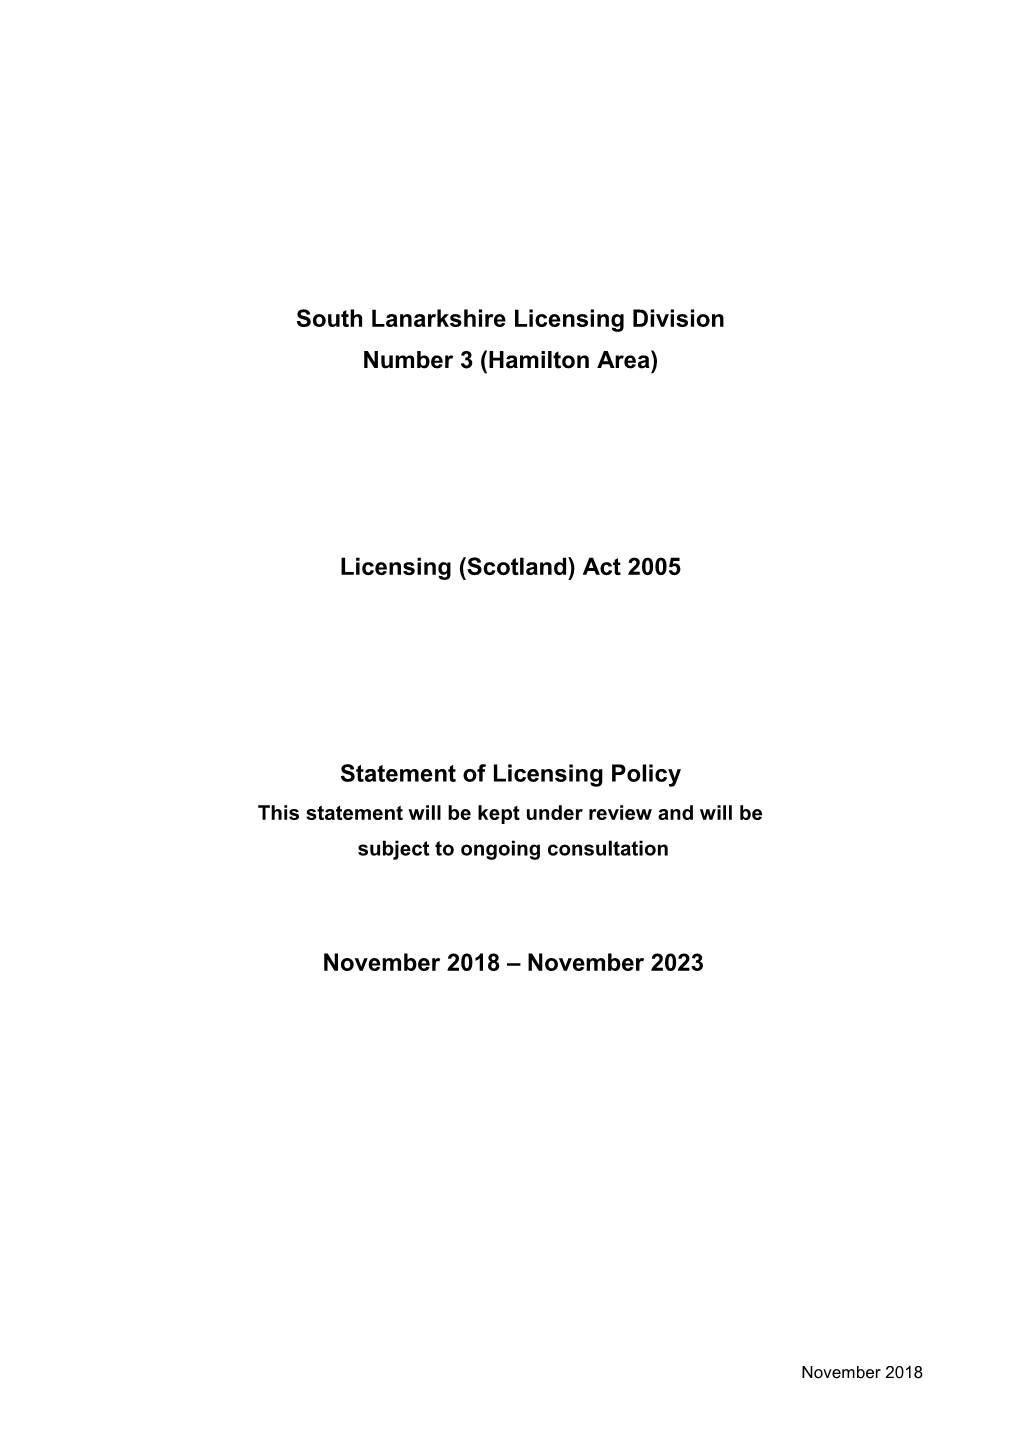 South Lanarkshire Licensing Division Number 3 (Hamilton Area)